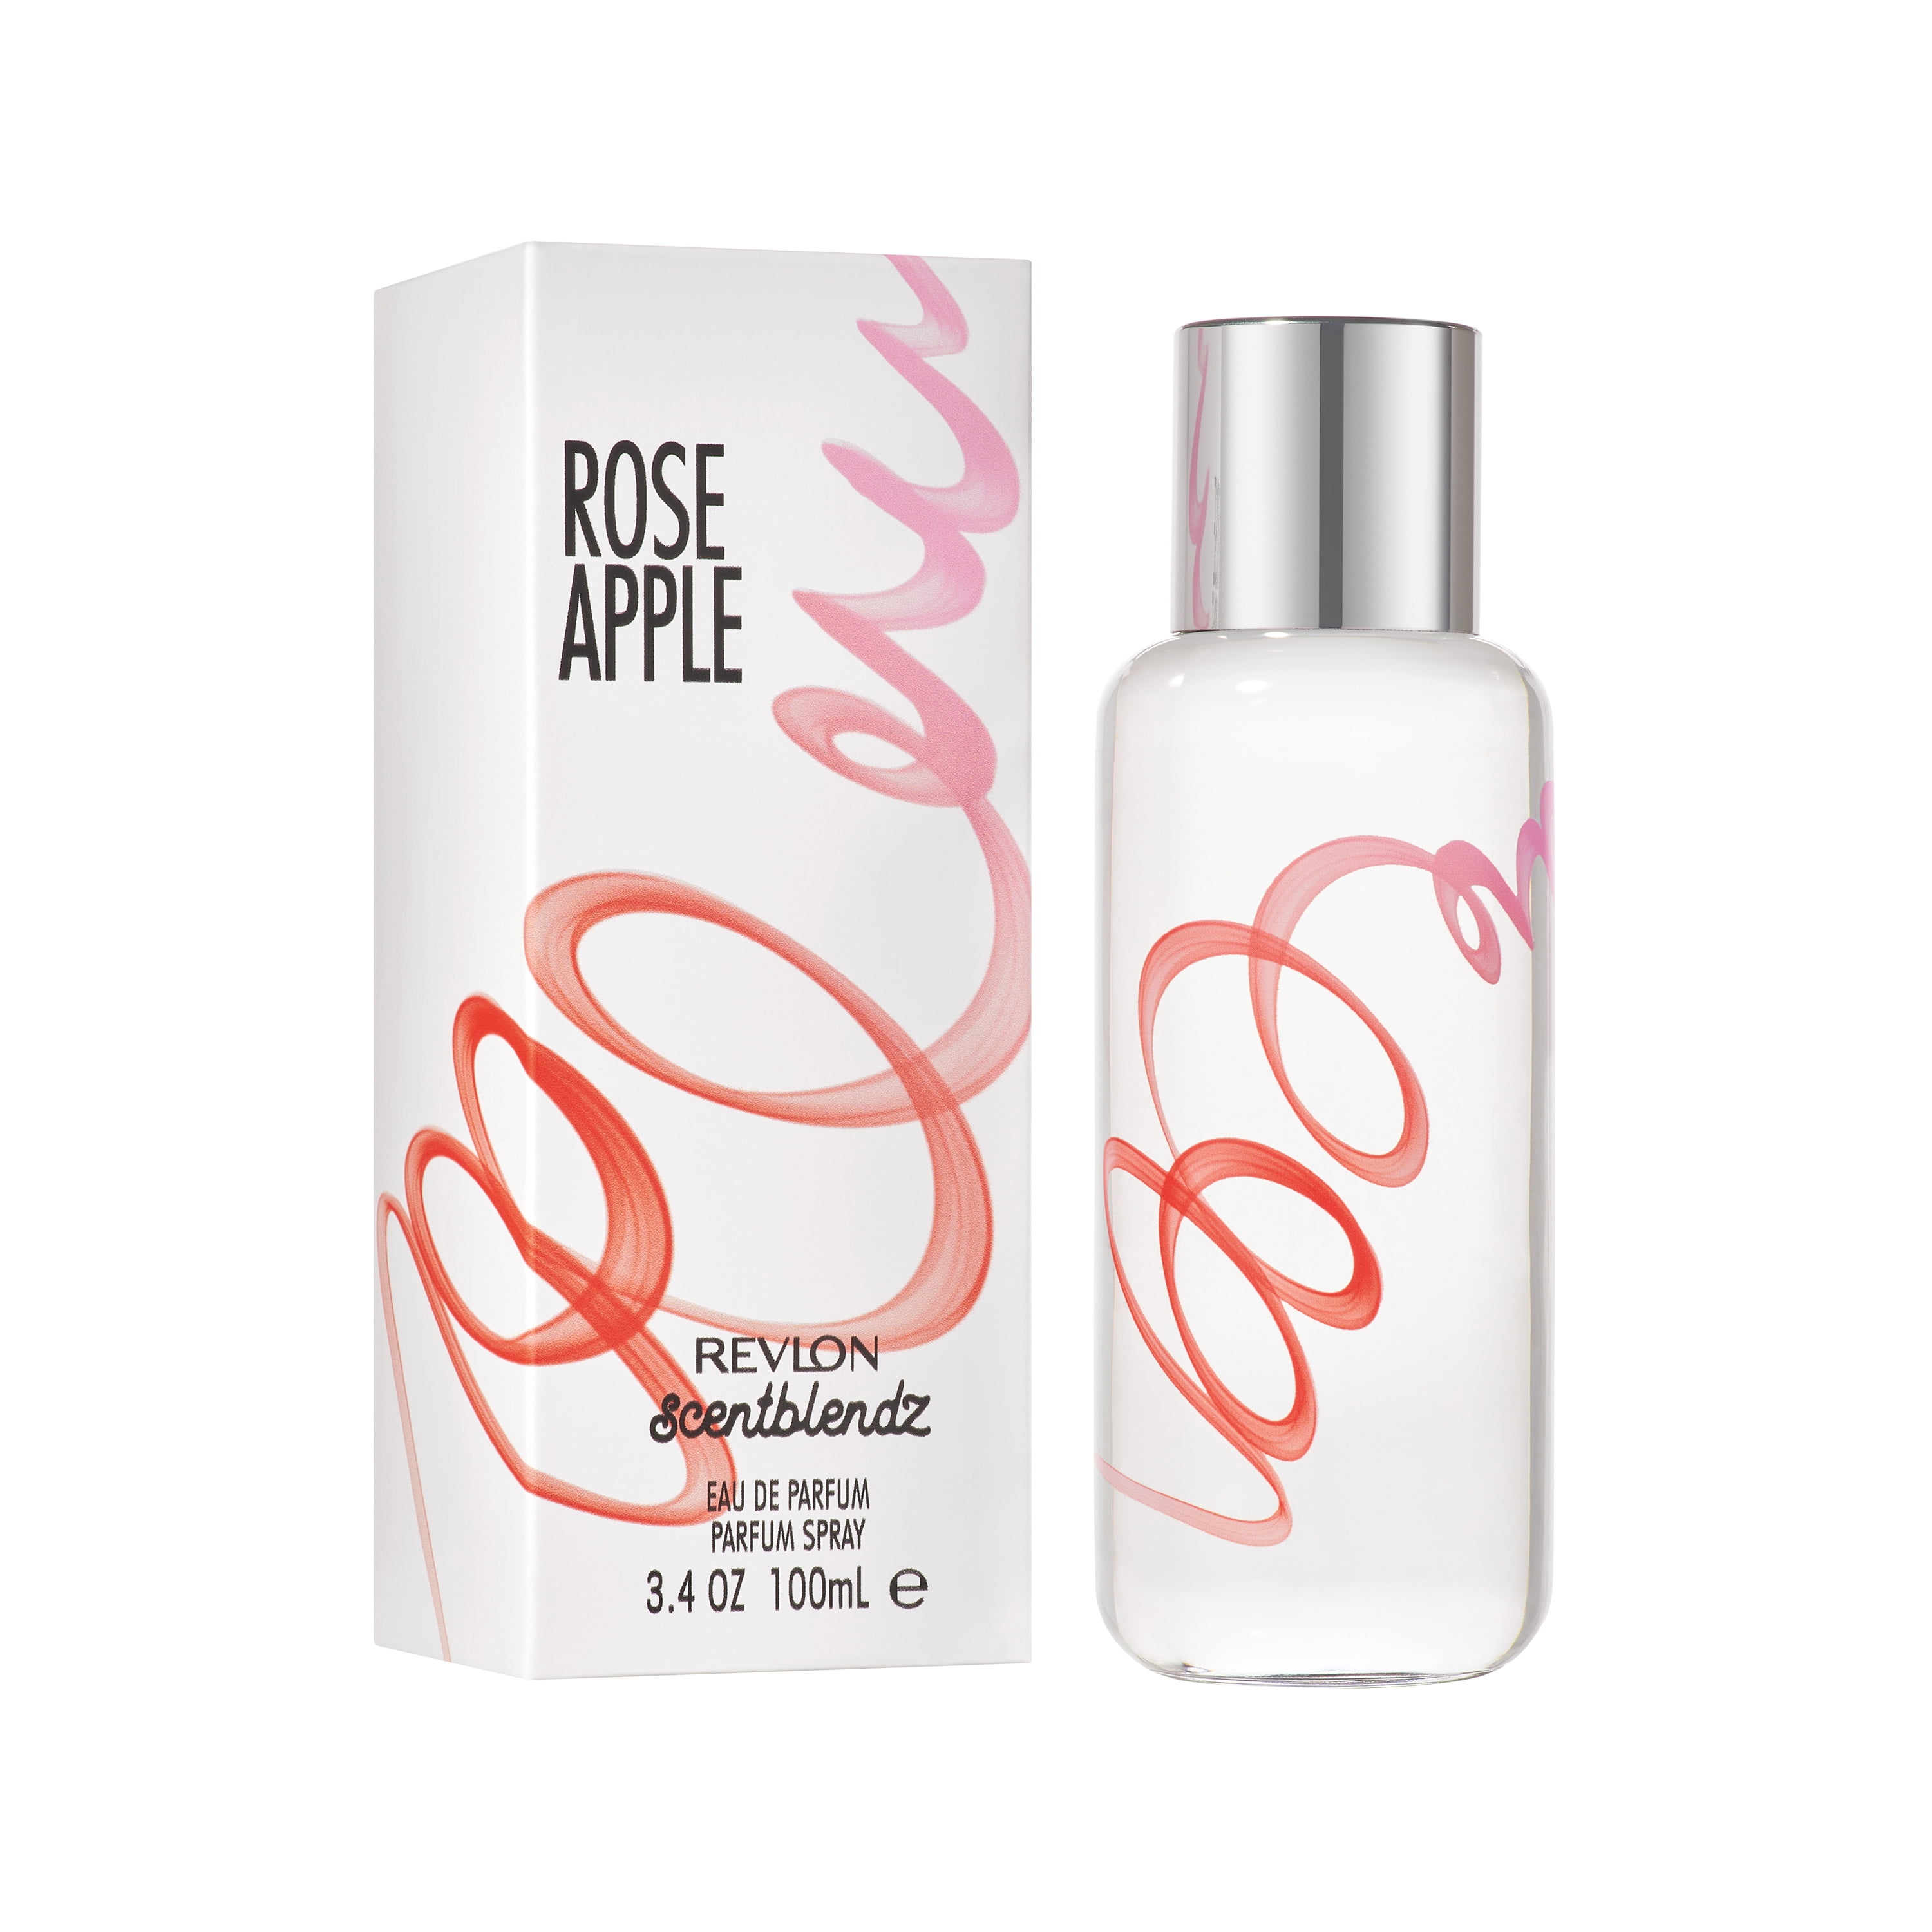 Revlon Scentblendz, Rose Apple Eau de Parfum, Artisanal Fragrance Spray, Perfume for Women, 3.4 fl. Oz